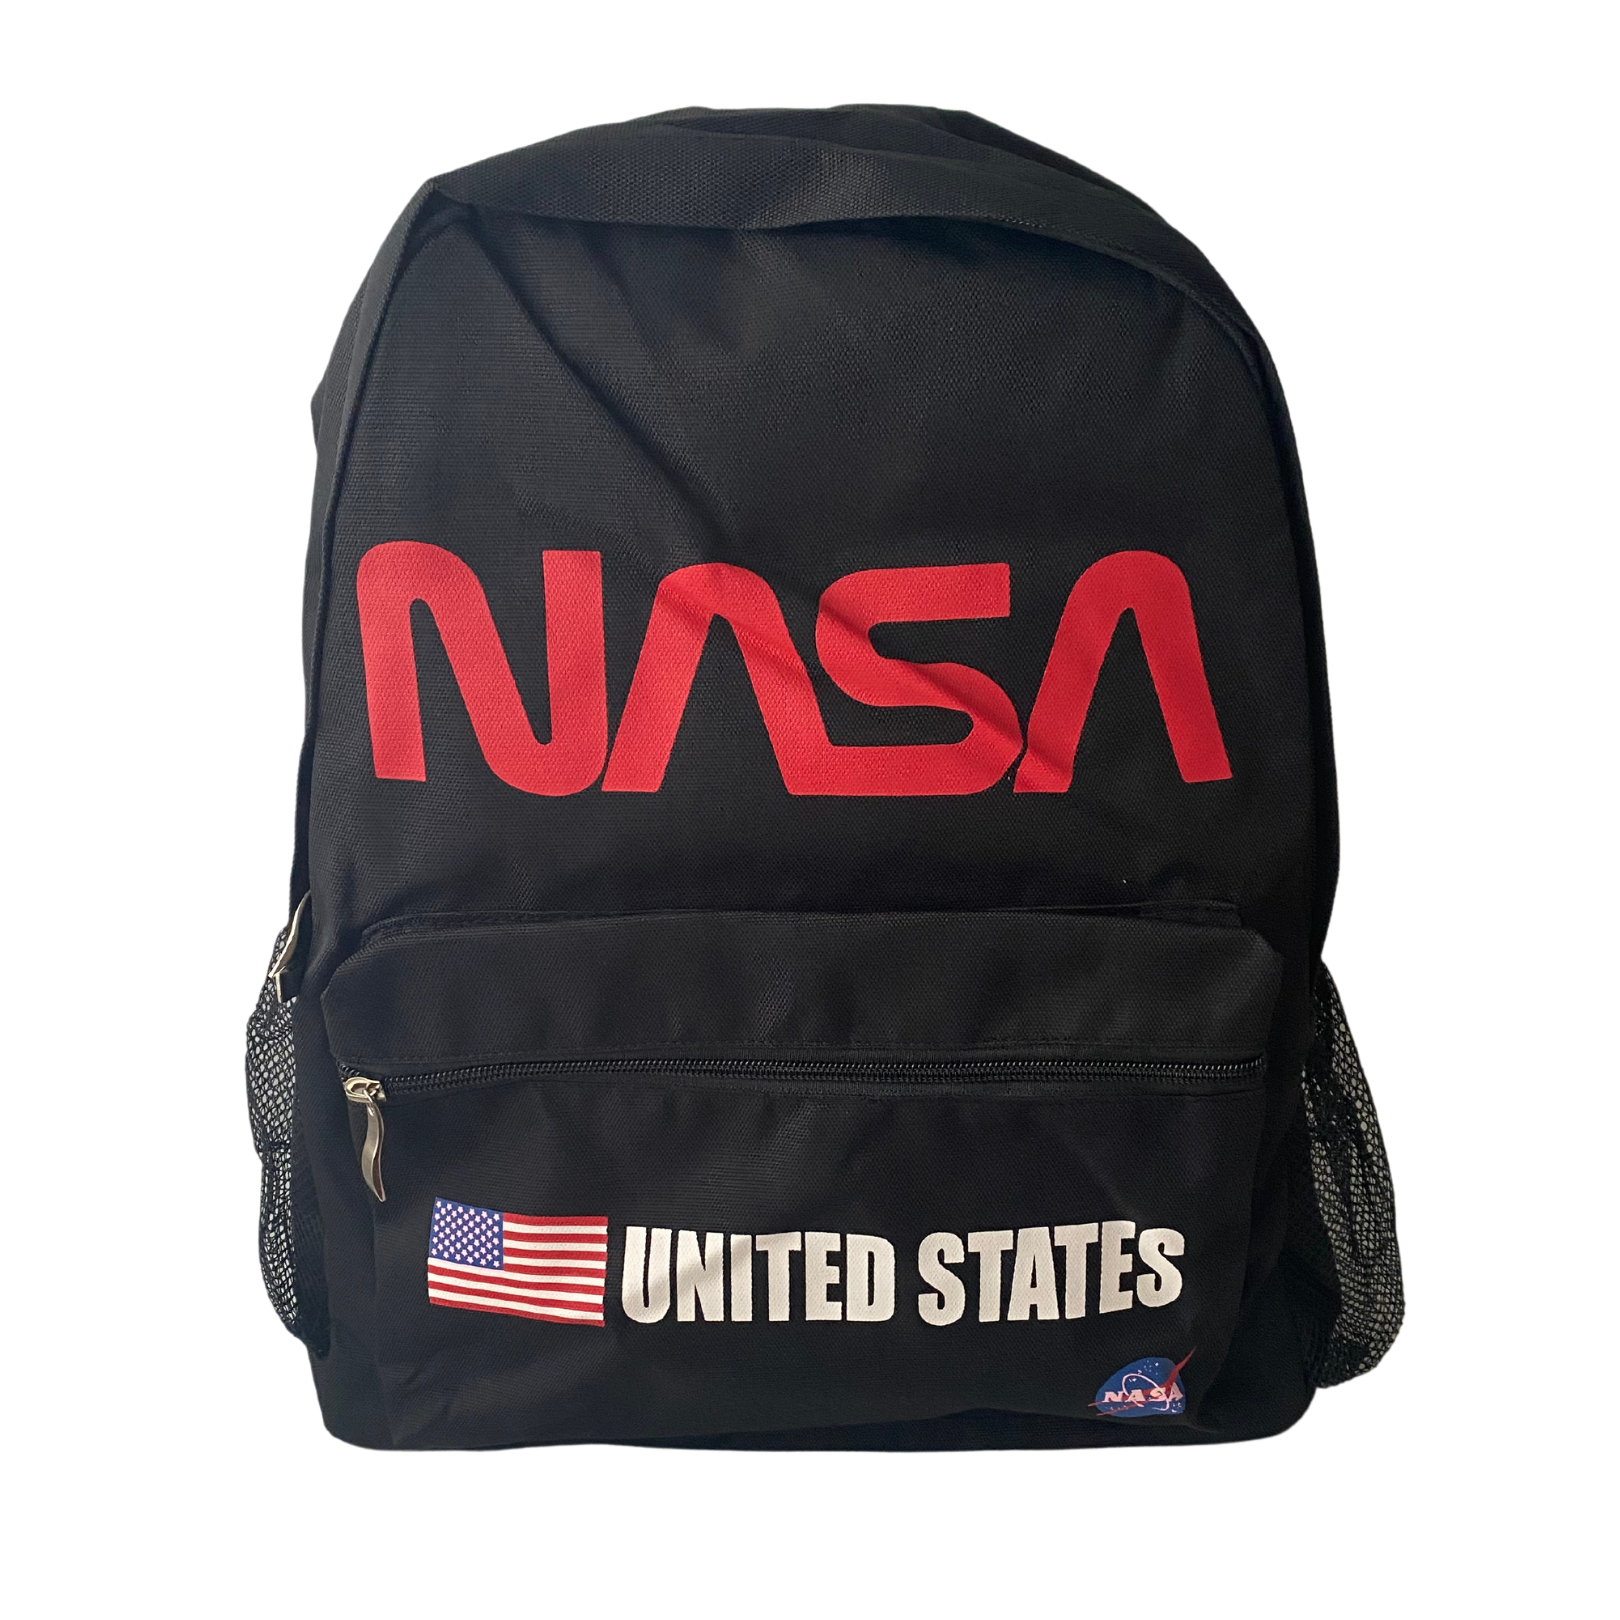 Adult NASA Backpack - Walmart.com